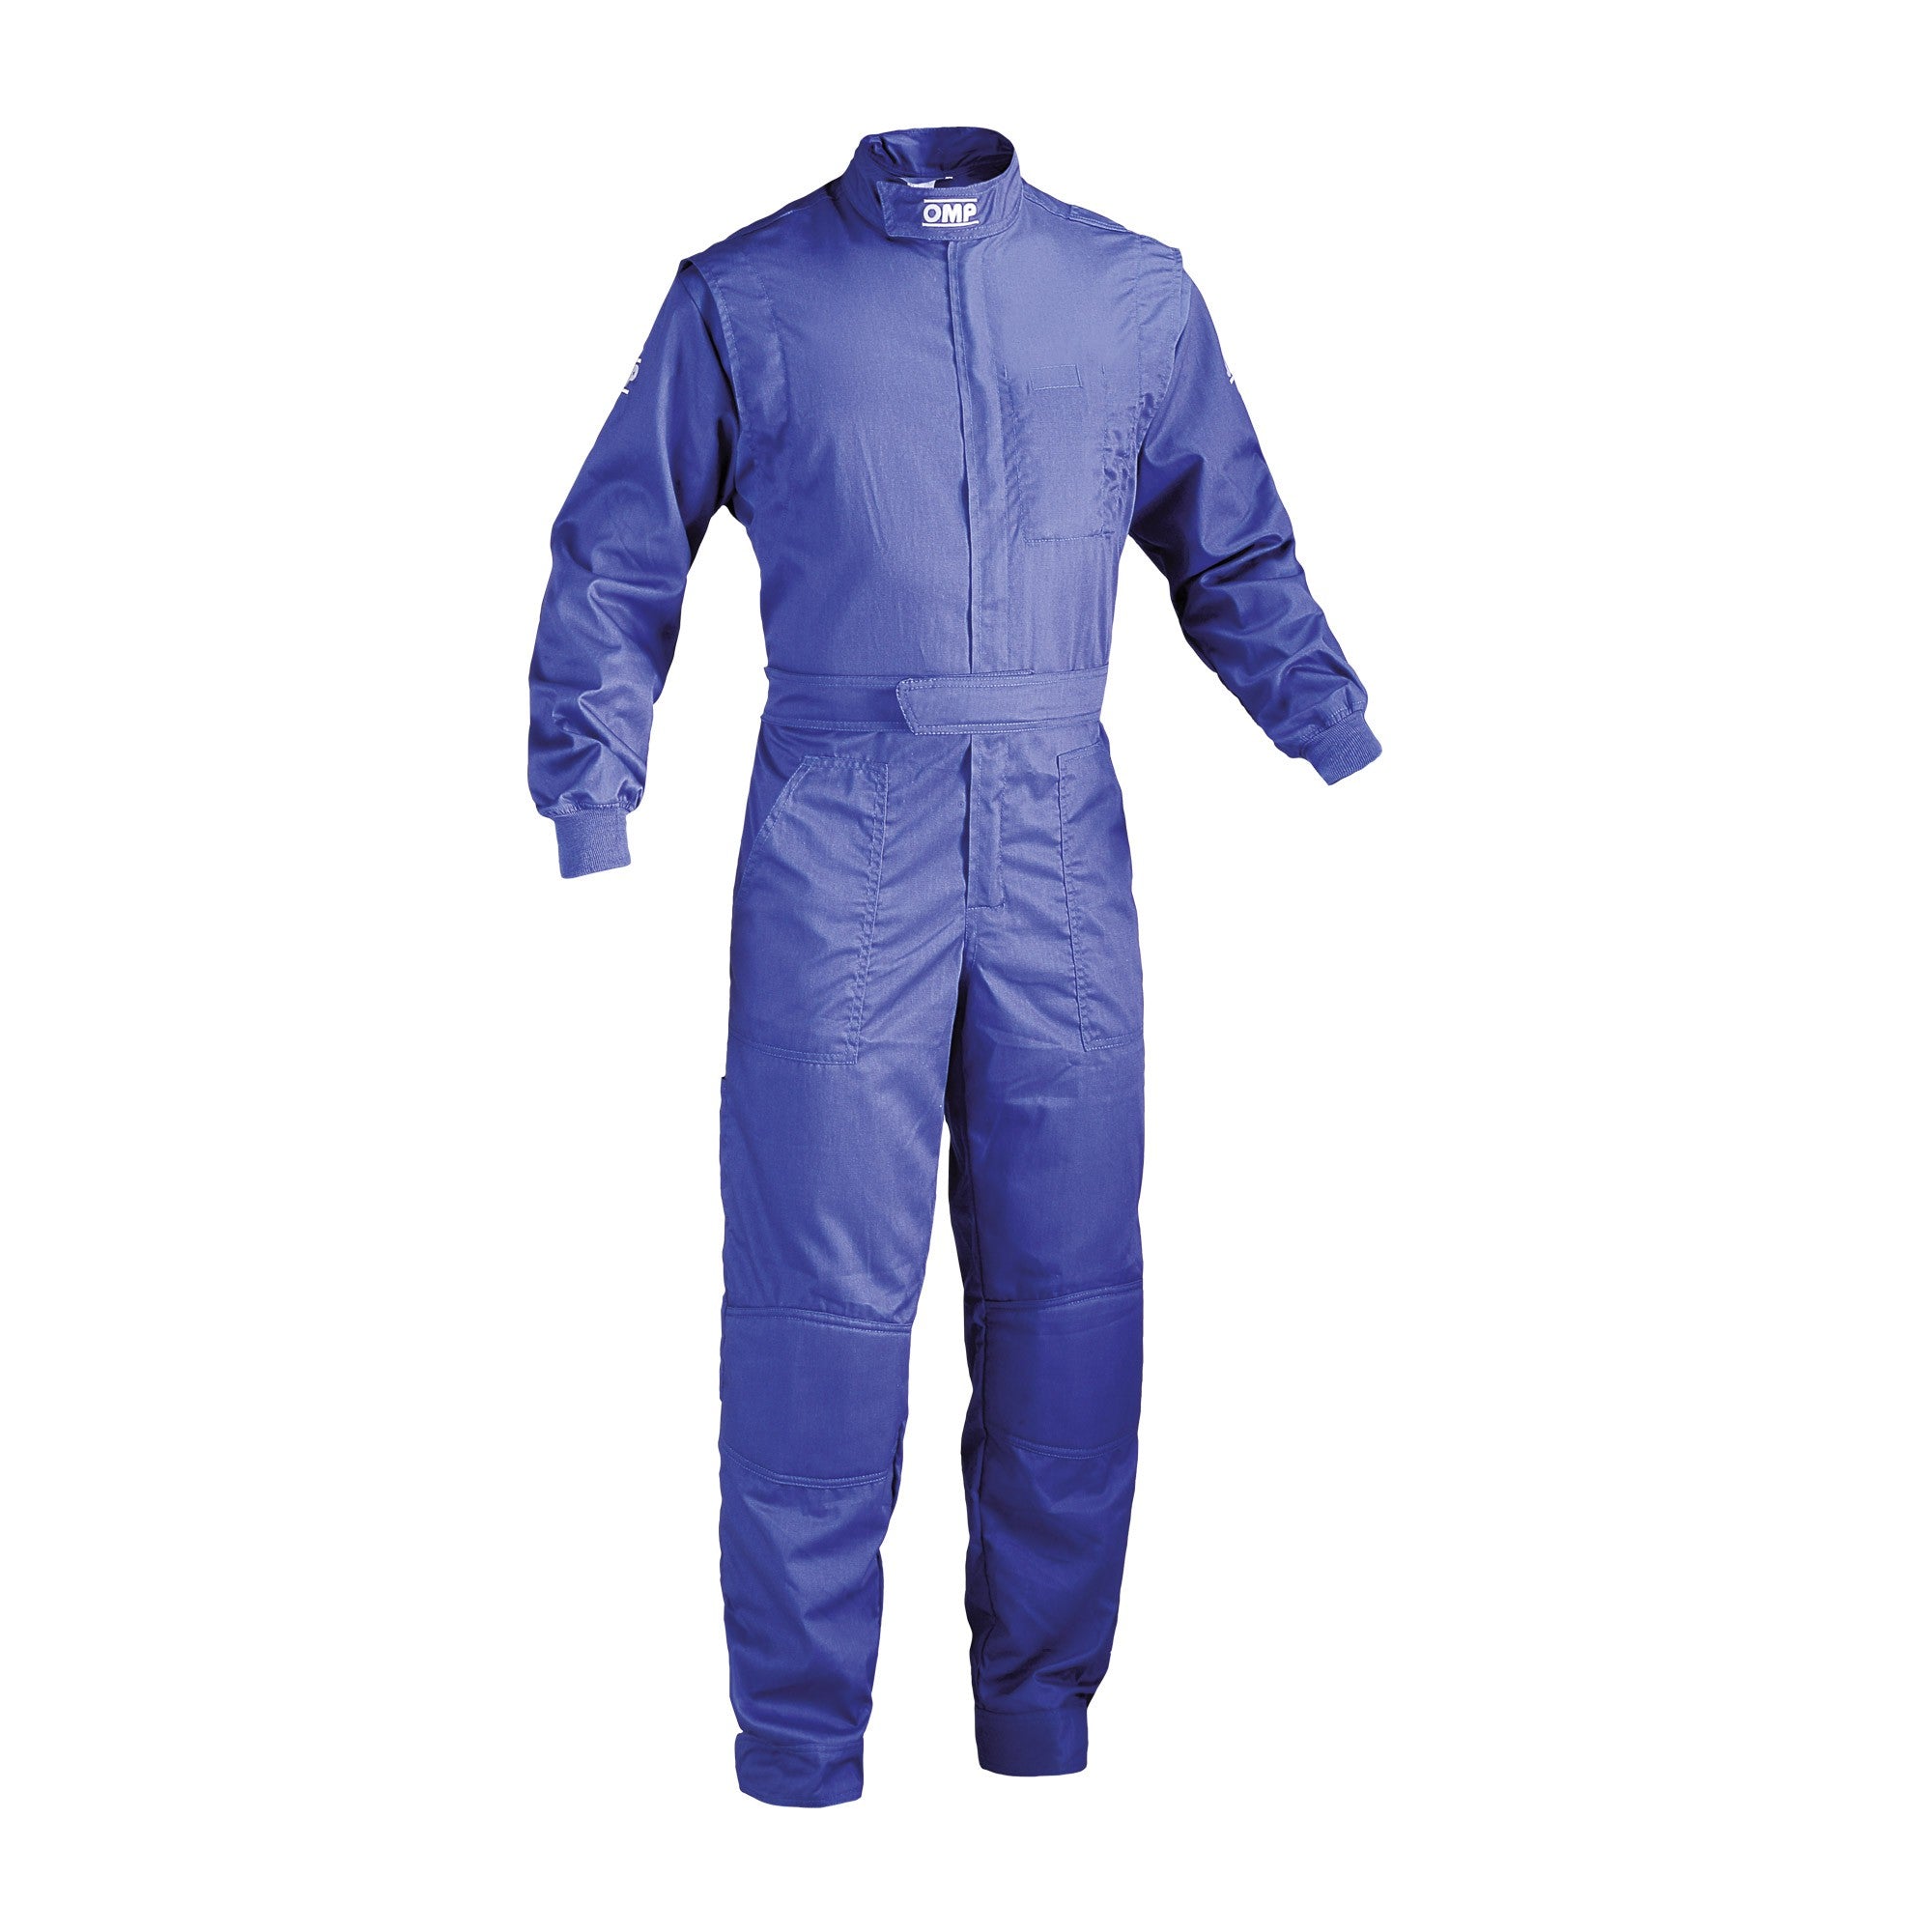 OMP NB0-1579-AK1-041-150 (NB1579041150) Mechanic suit SUMMER, kid blue, size 150 Photo-0 